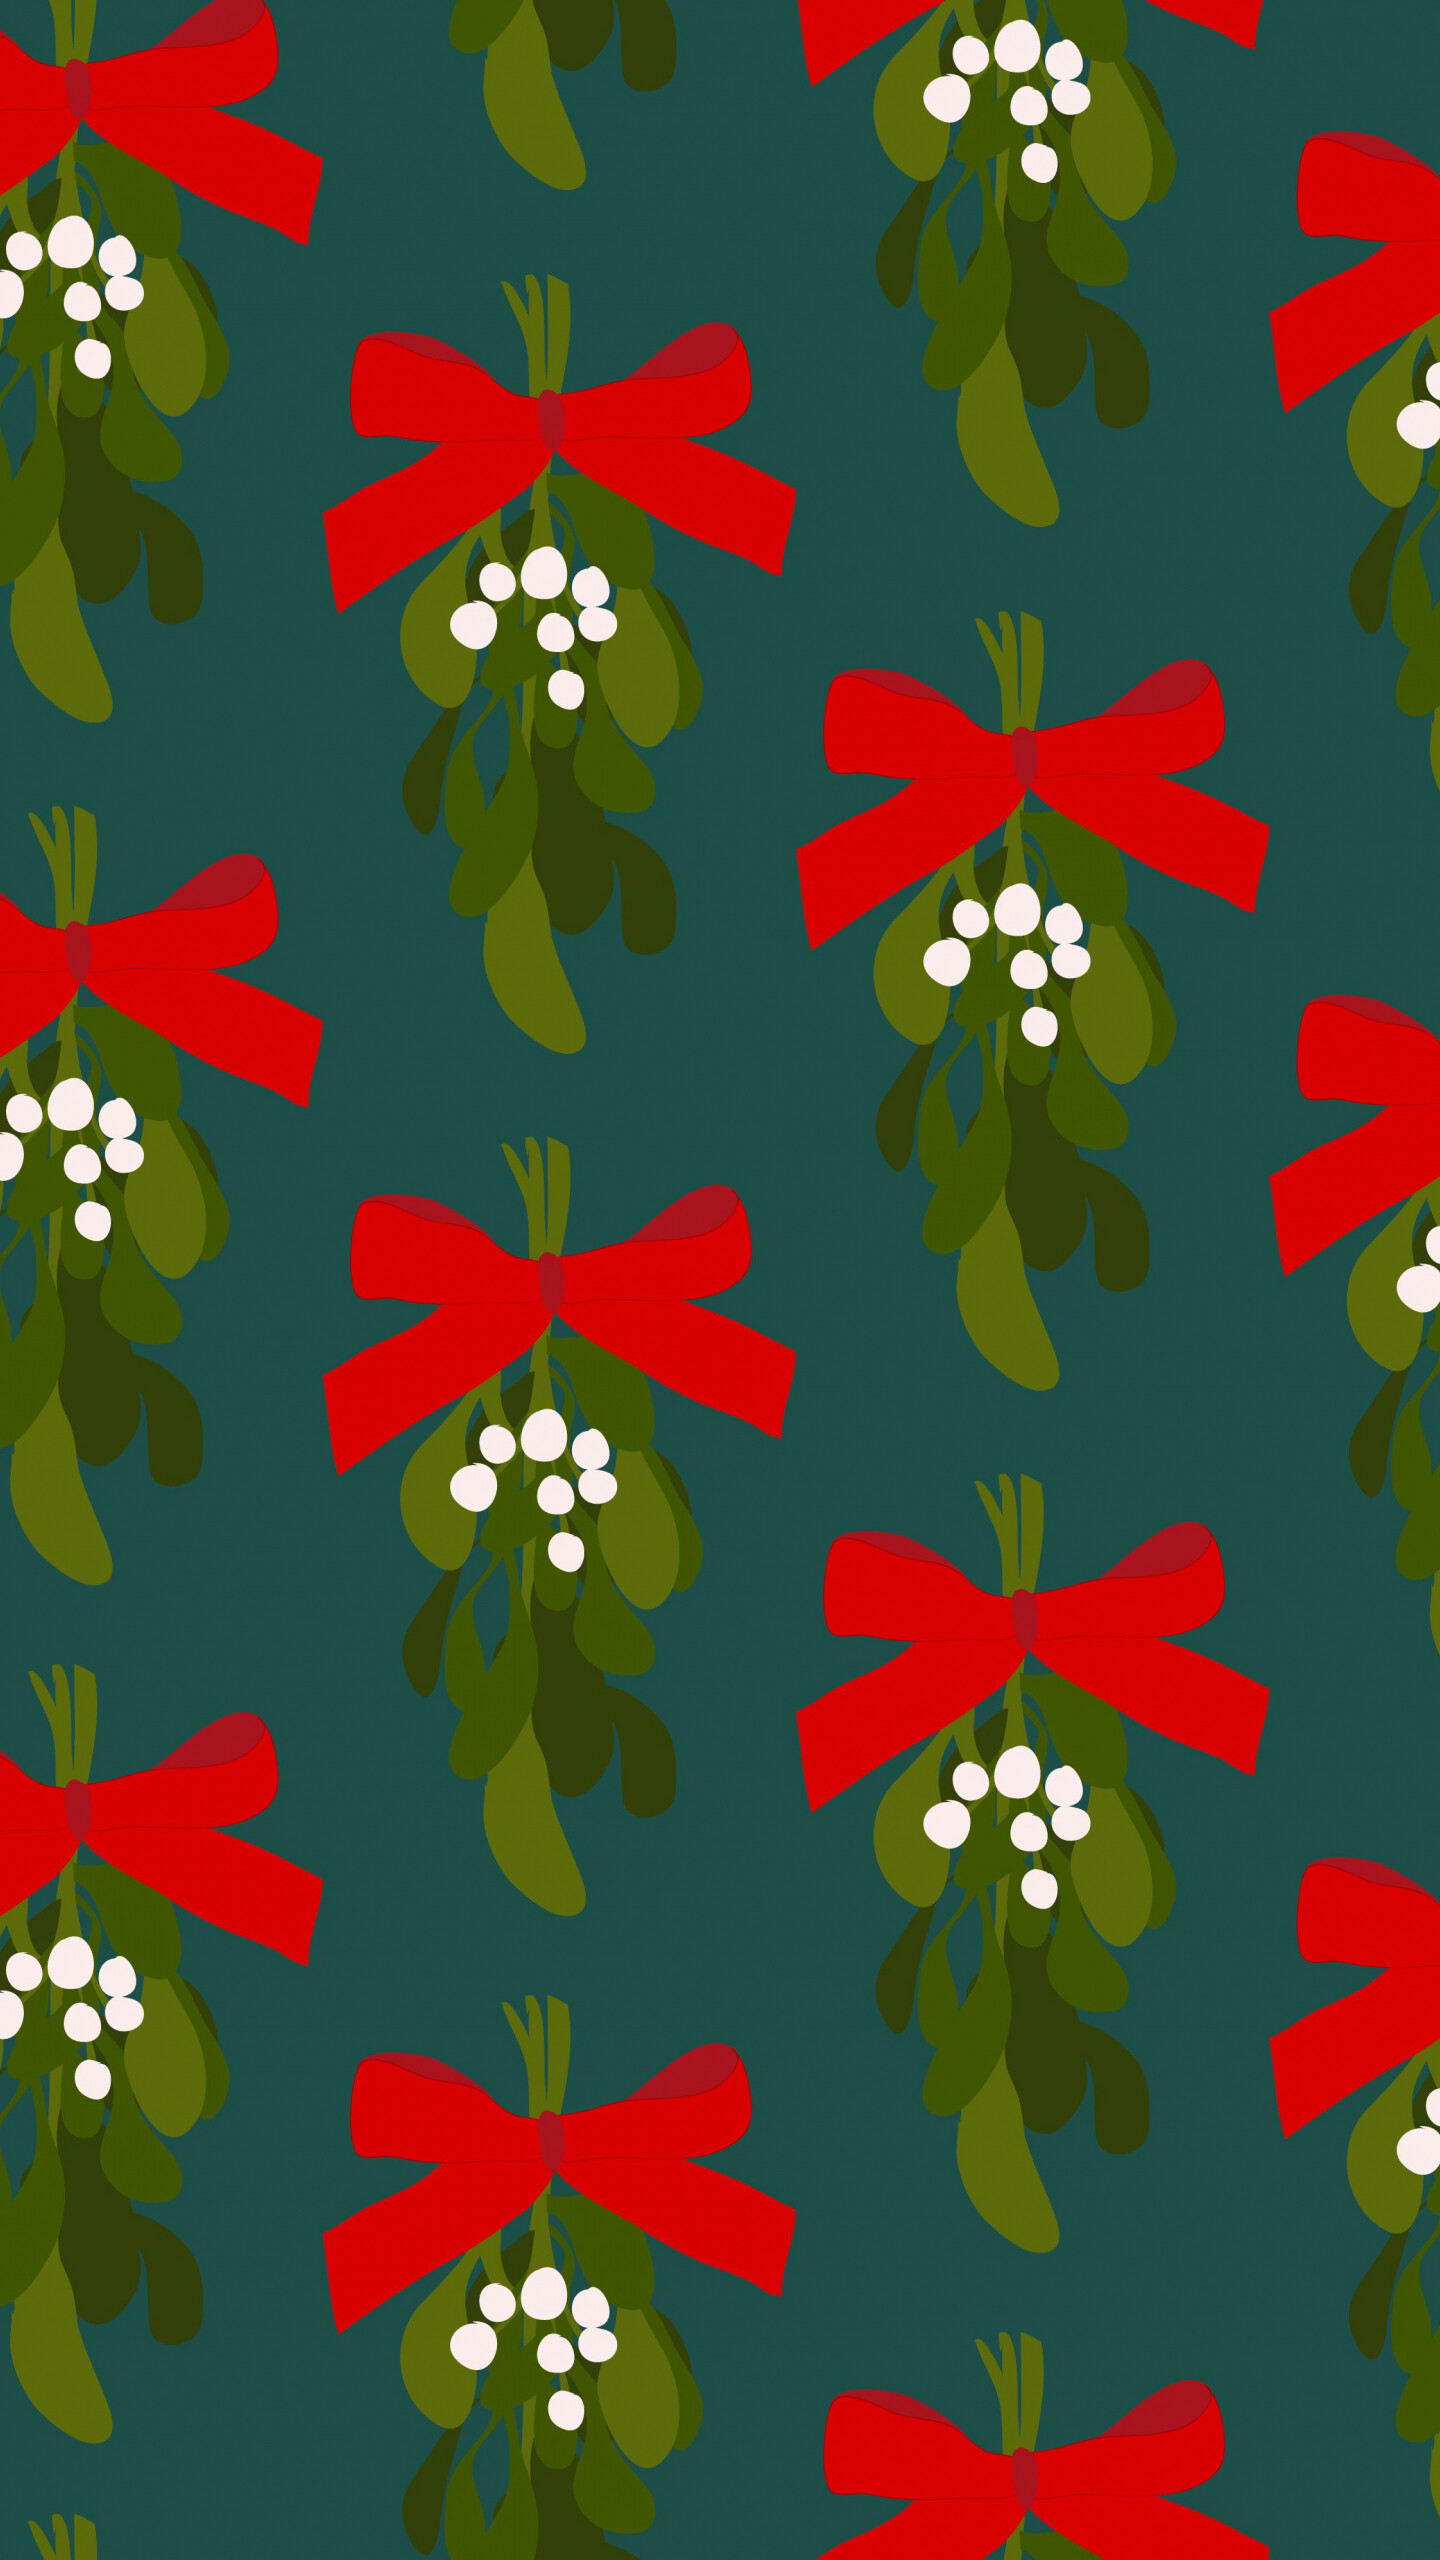 Mistletoe: Christmas ornament and pattern, Celebration, Christmas tradition. 1440x2560 HD Wallpaper.